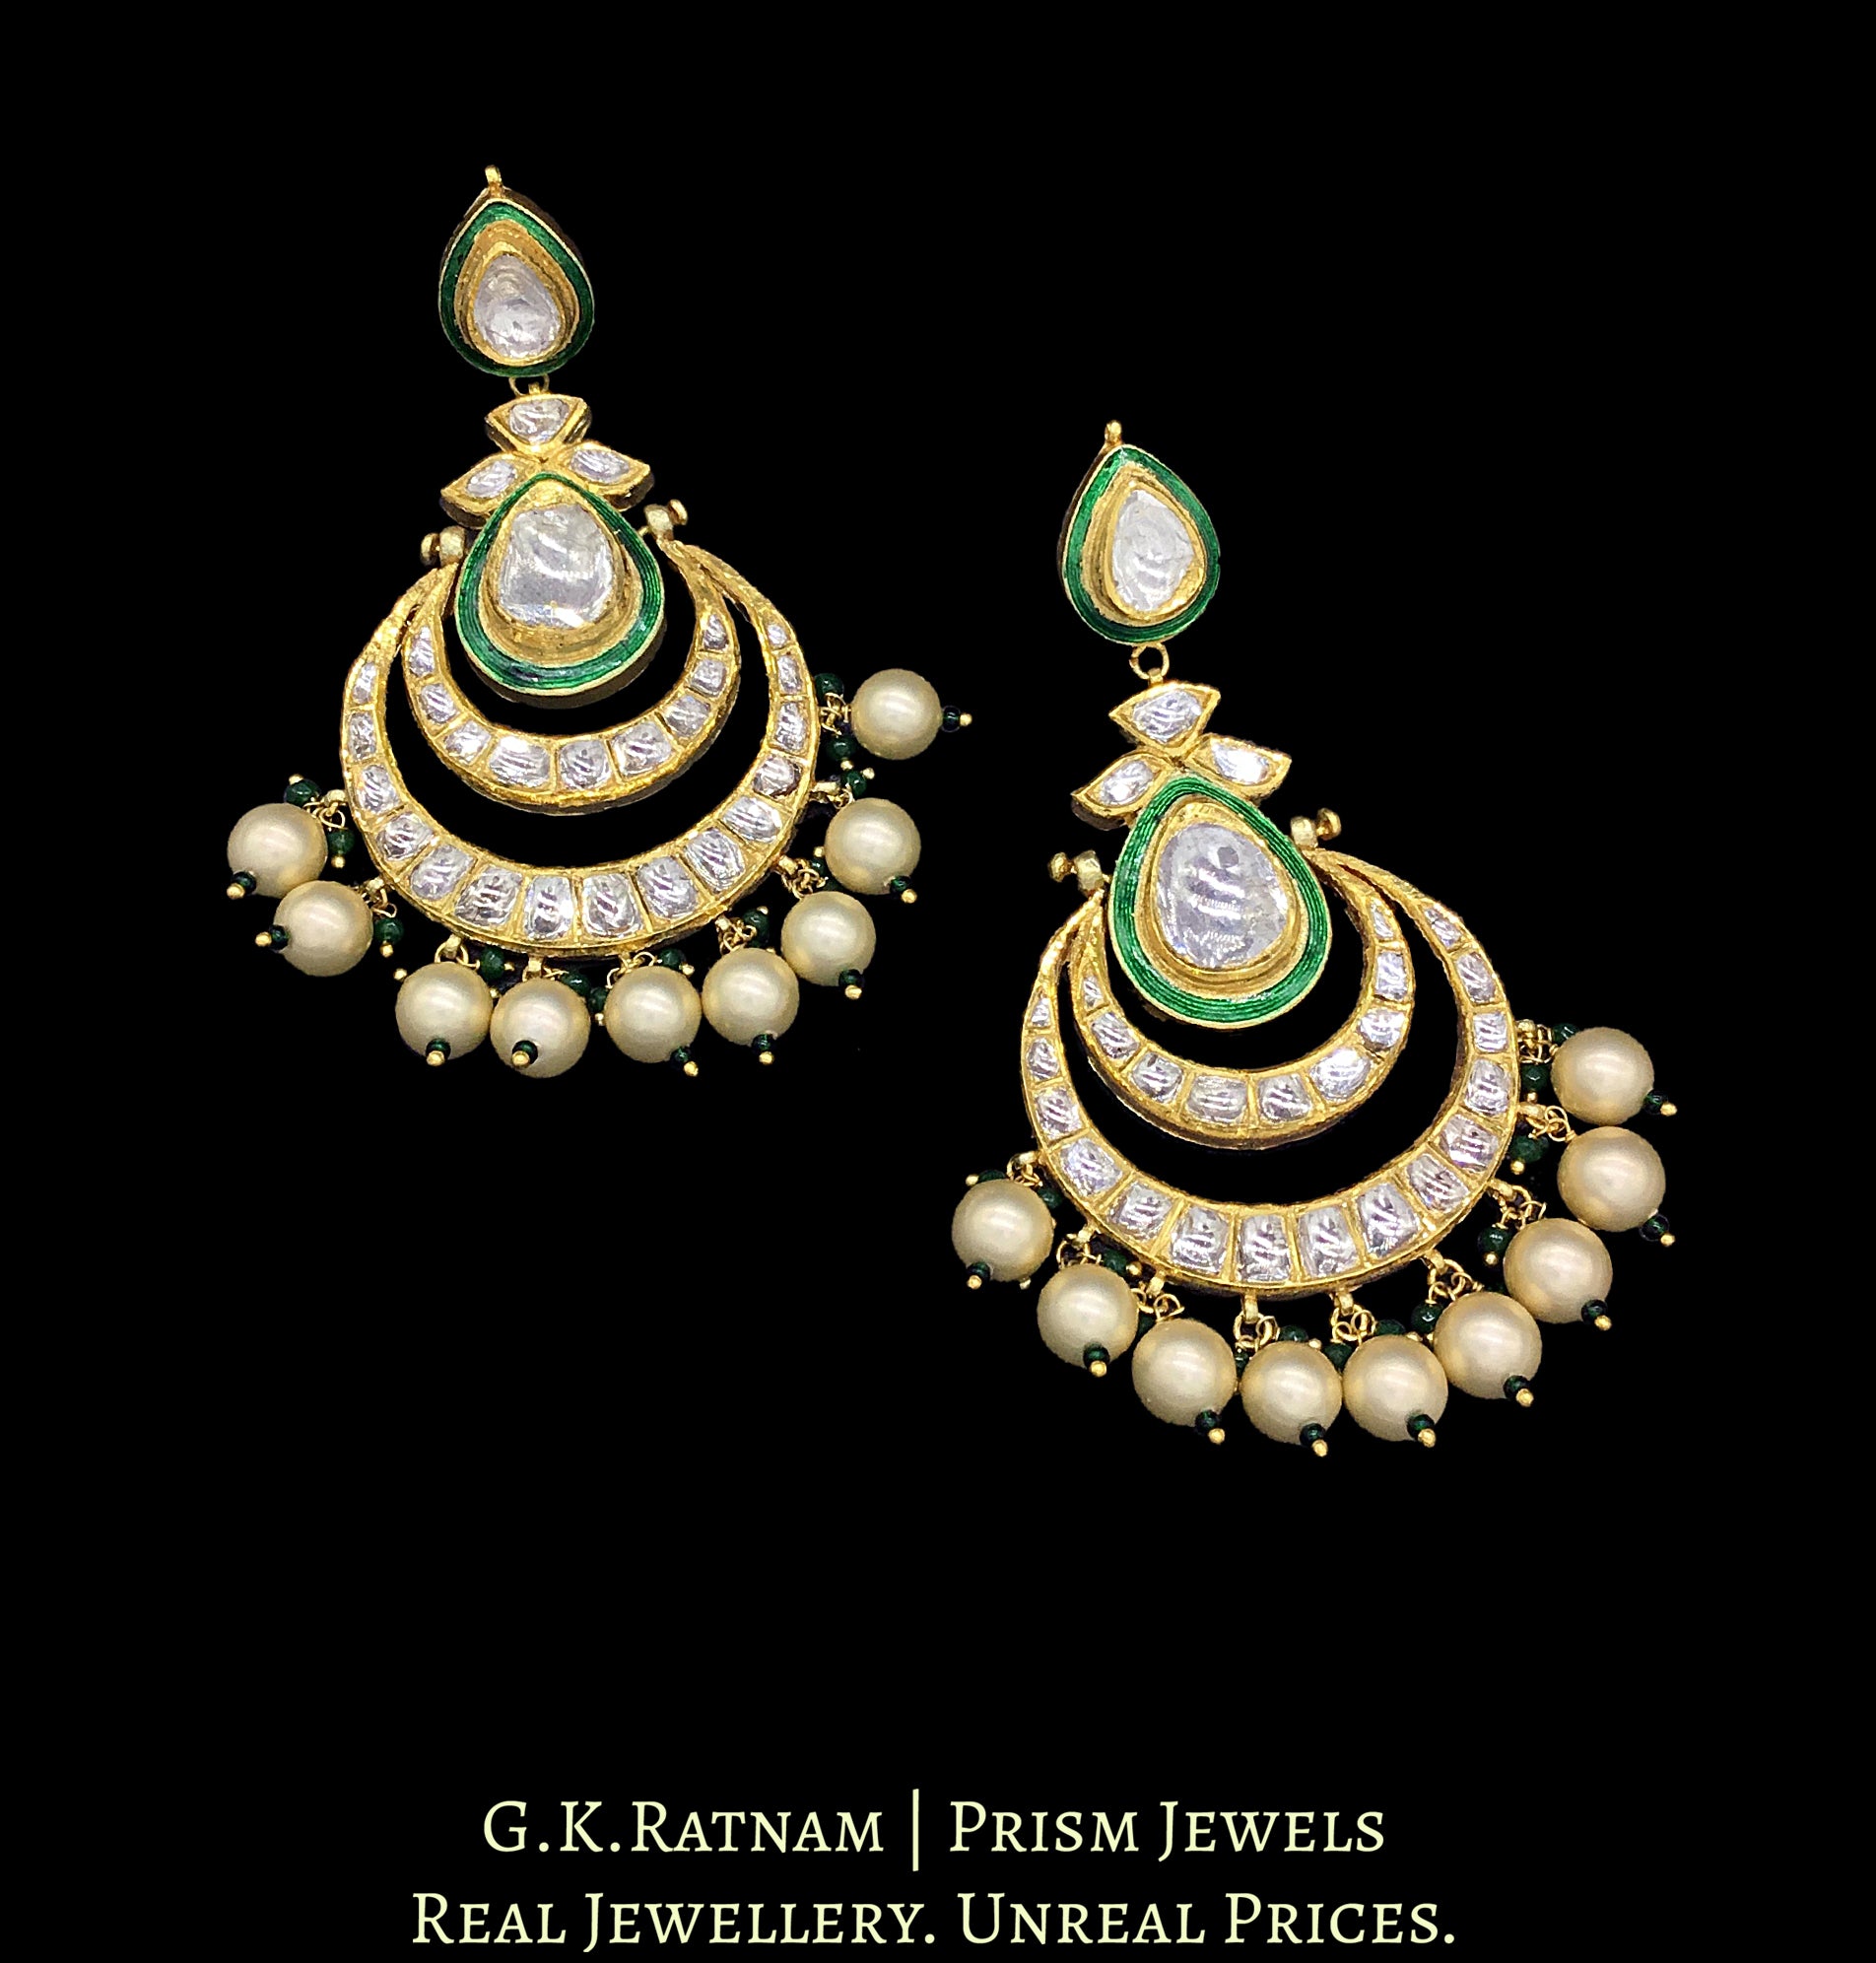 22k Gold and Diamond Polki Chand Bali Earring Pair with Green Enamelling - G. K. Ratnam